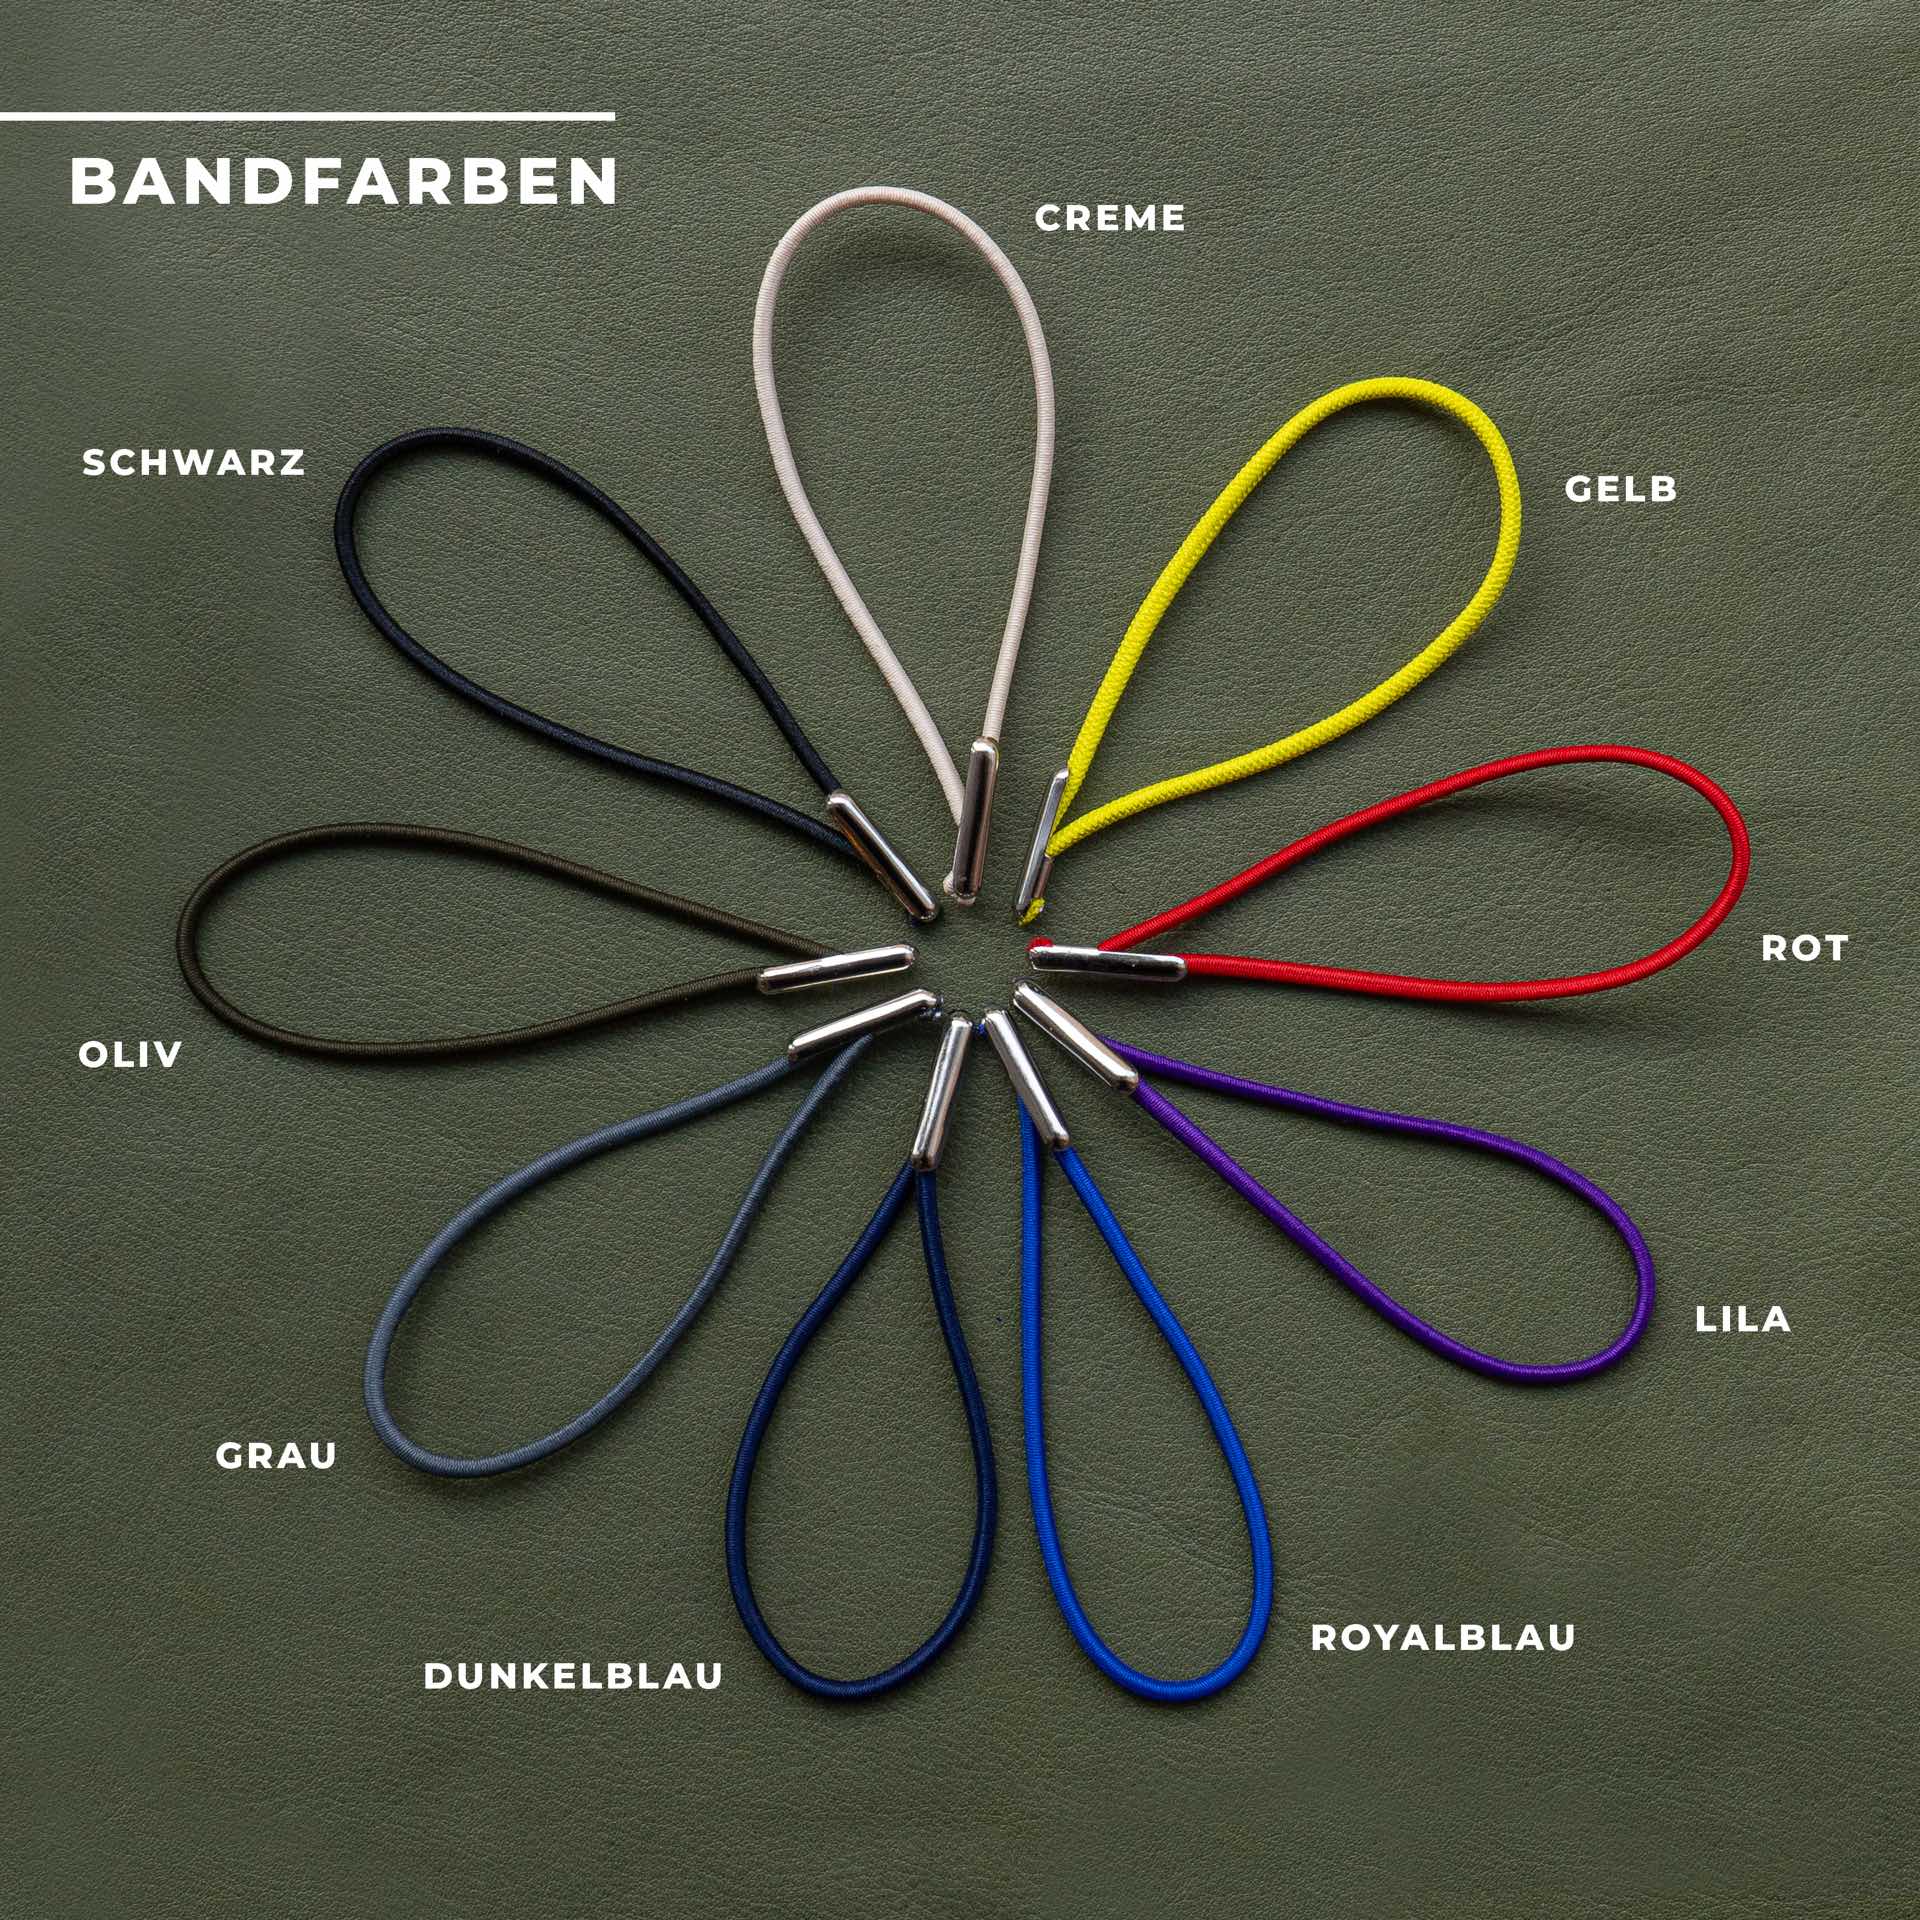 Bandfarben-Franziska-Klee-oliv-bandfarben